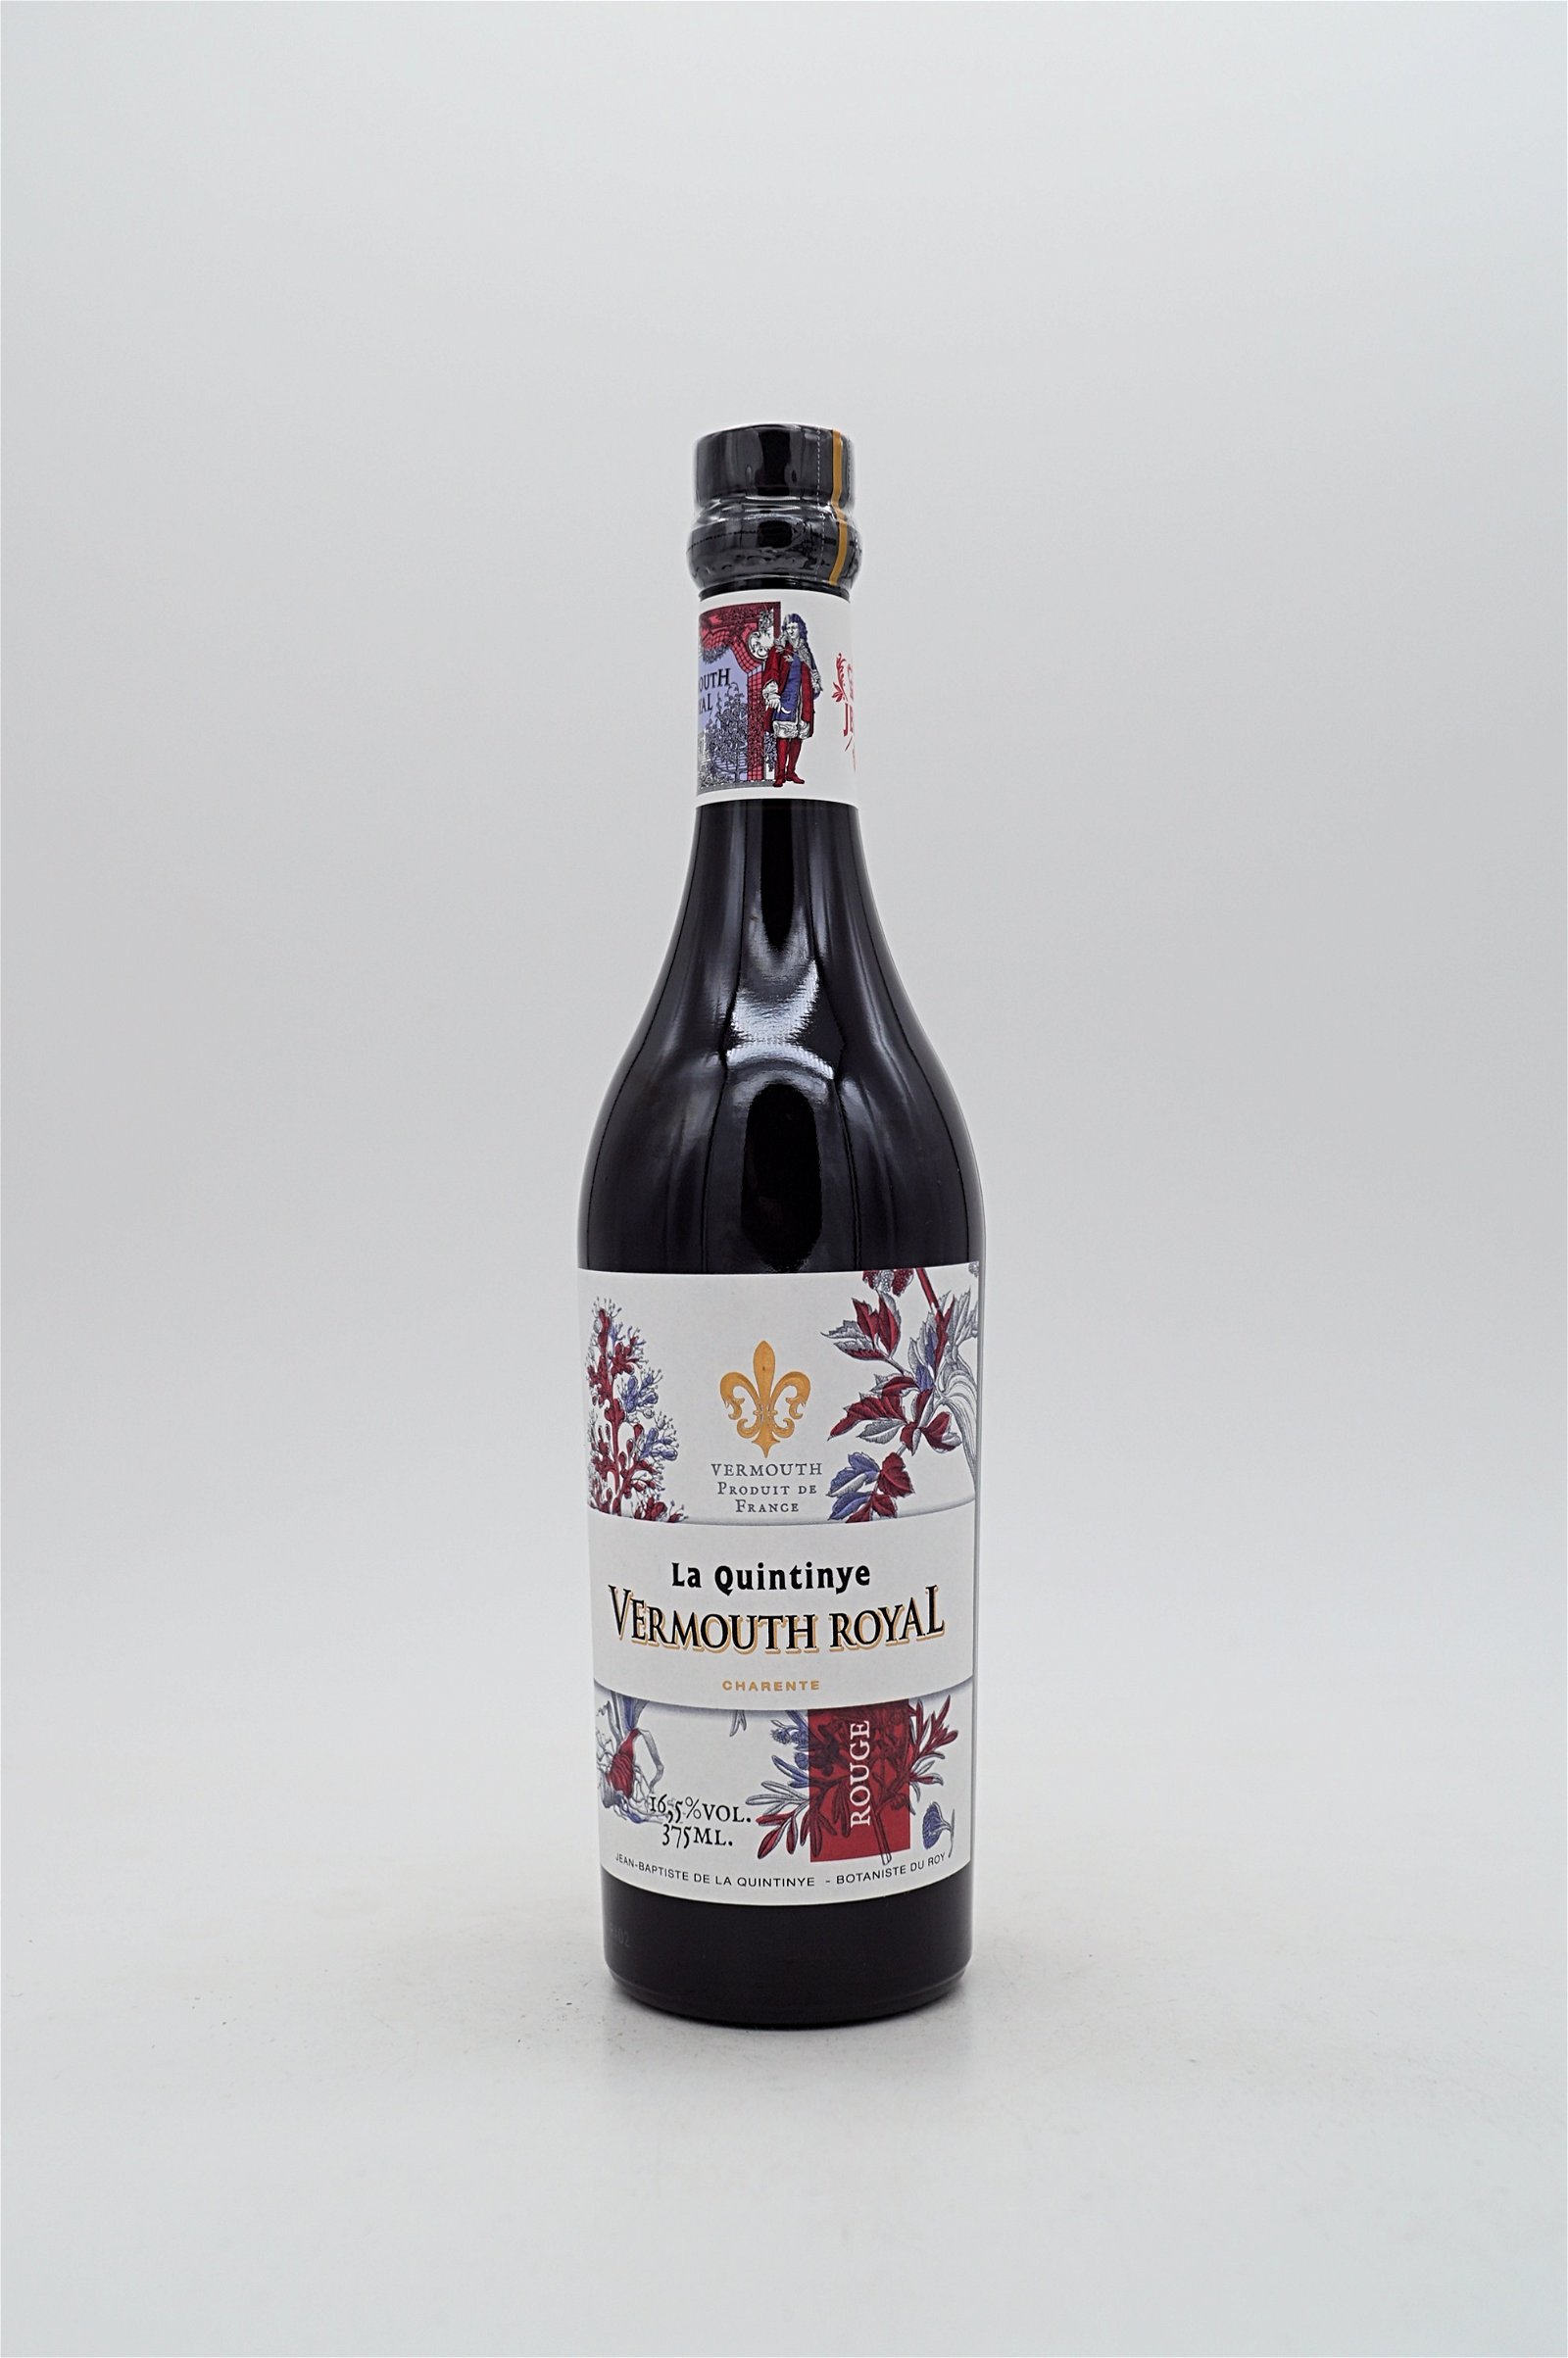 La Quintinye Rouge Vermouth Royal